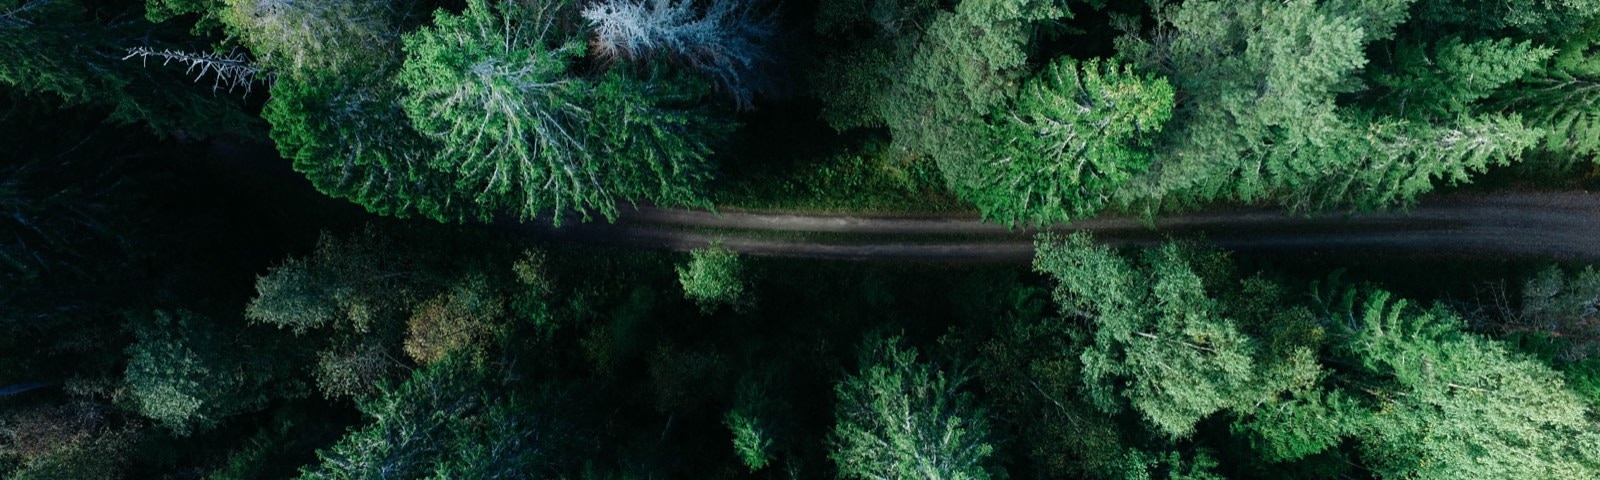 Fotografia urobená nad tmavozeleným lesom.